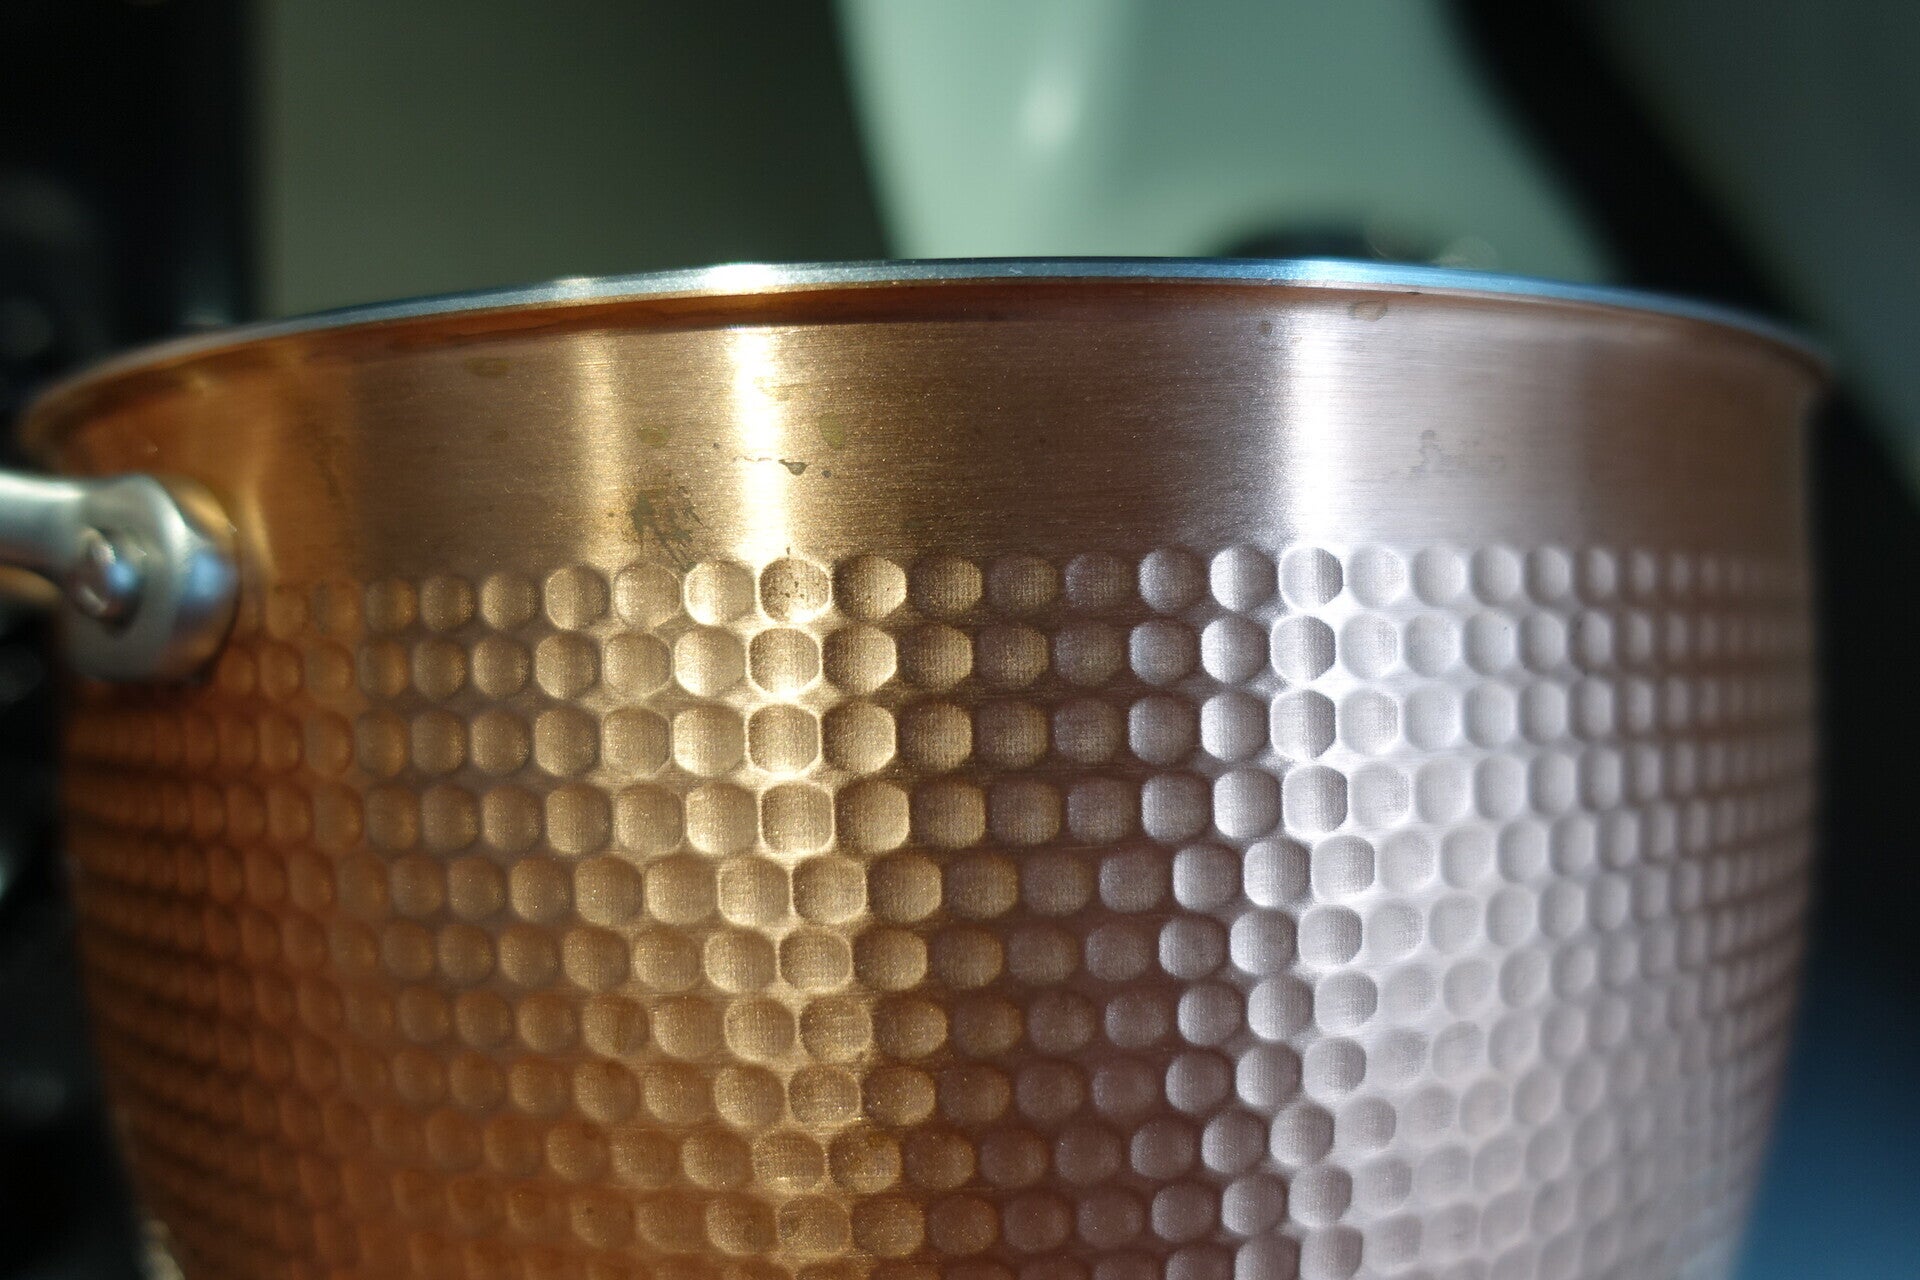 Detalle del tazón de la batidora con pie Blossom de la serie Design de KitchenAid